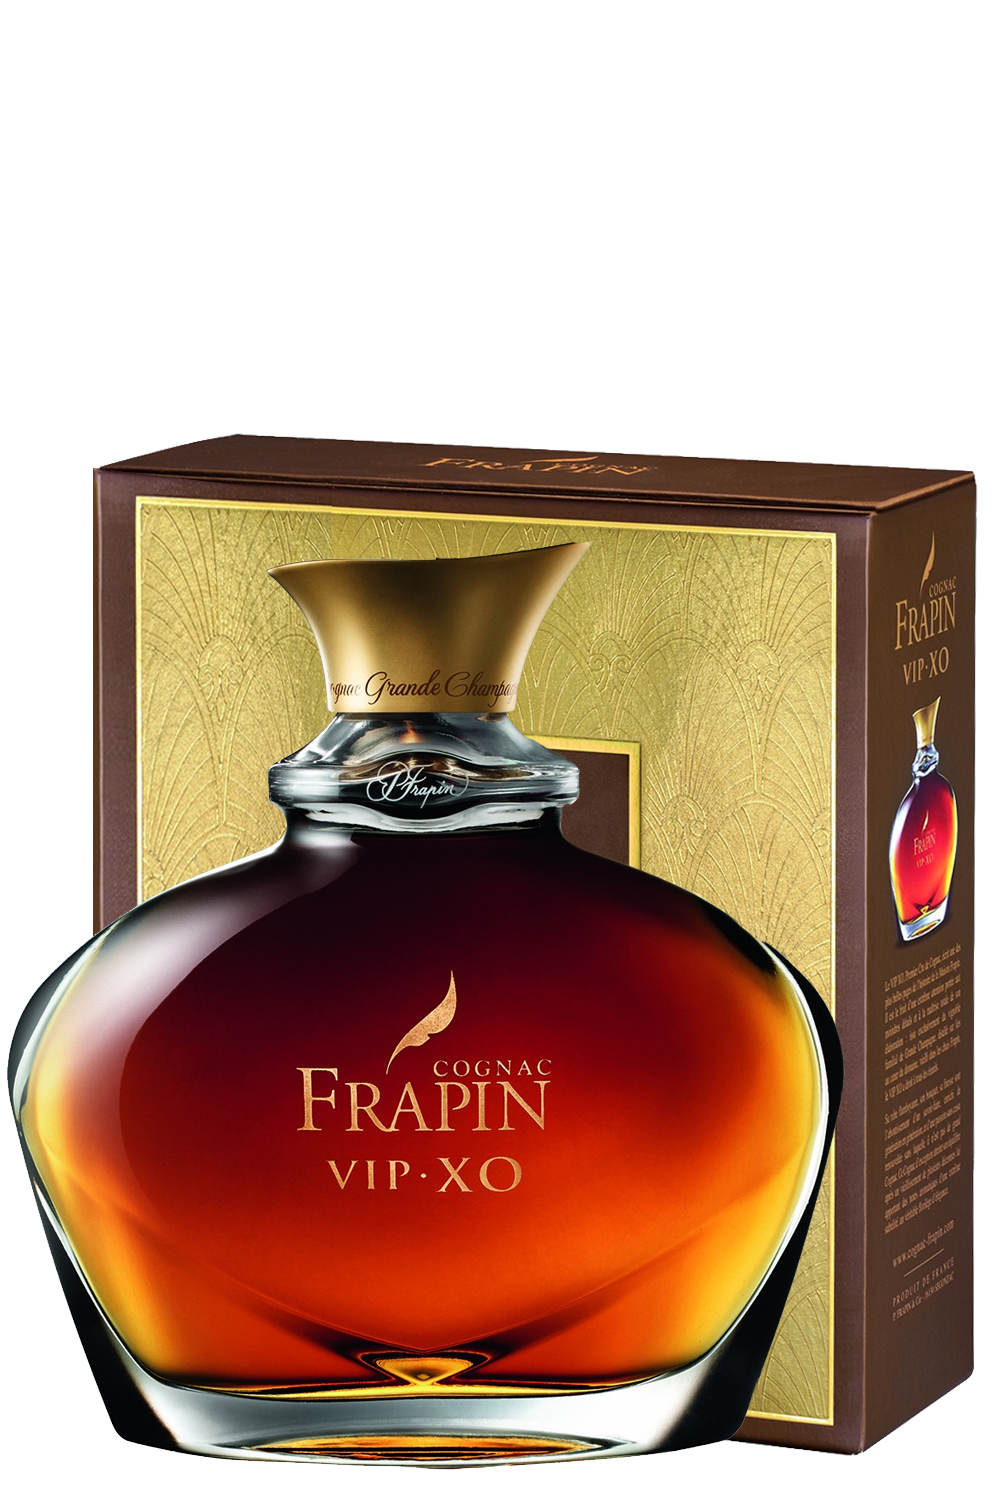 Frapin 0.7 цена. Frapin Cognac. Коньяк Фрапен Хо 0.7. Коньяк Frapin. Frapin VSOP.